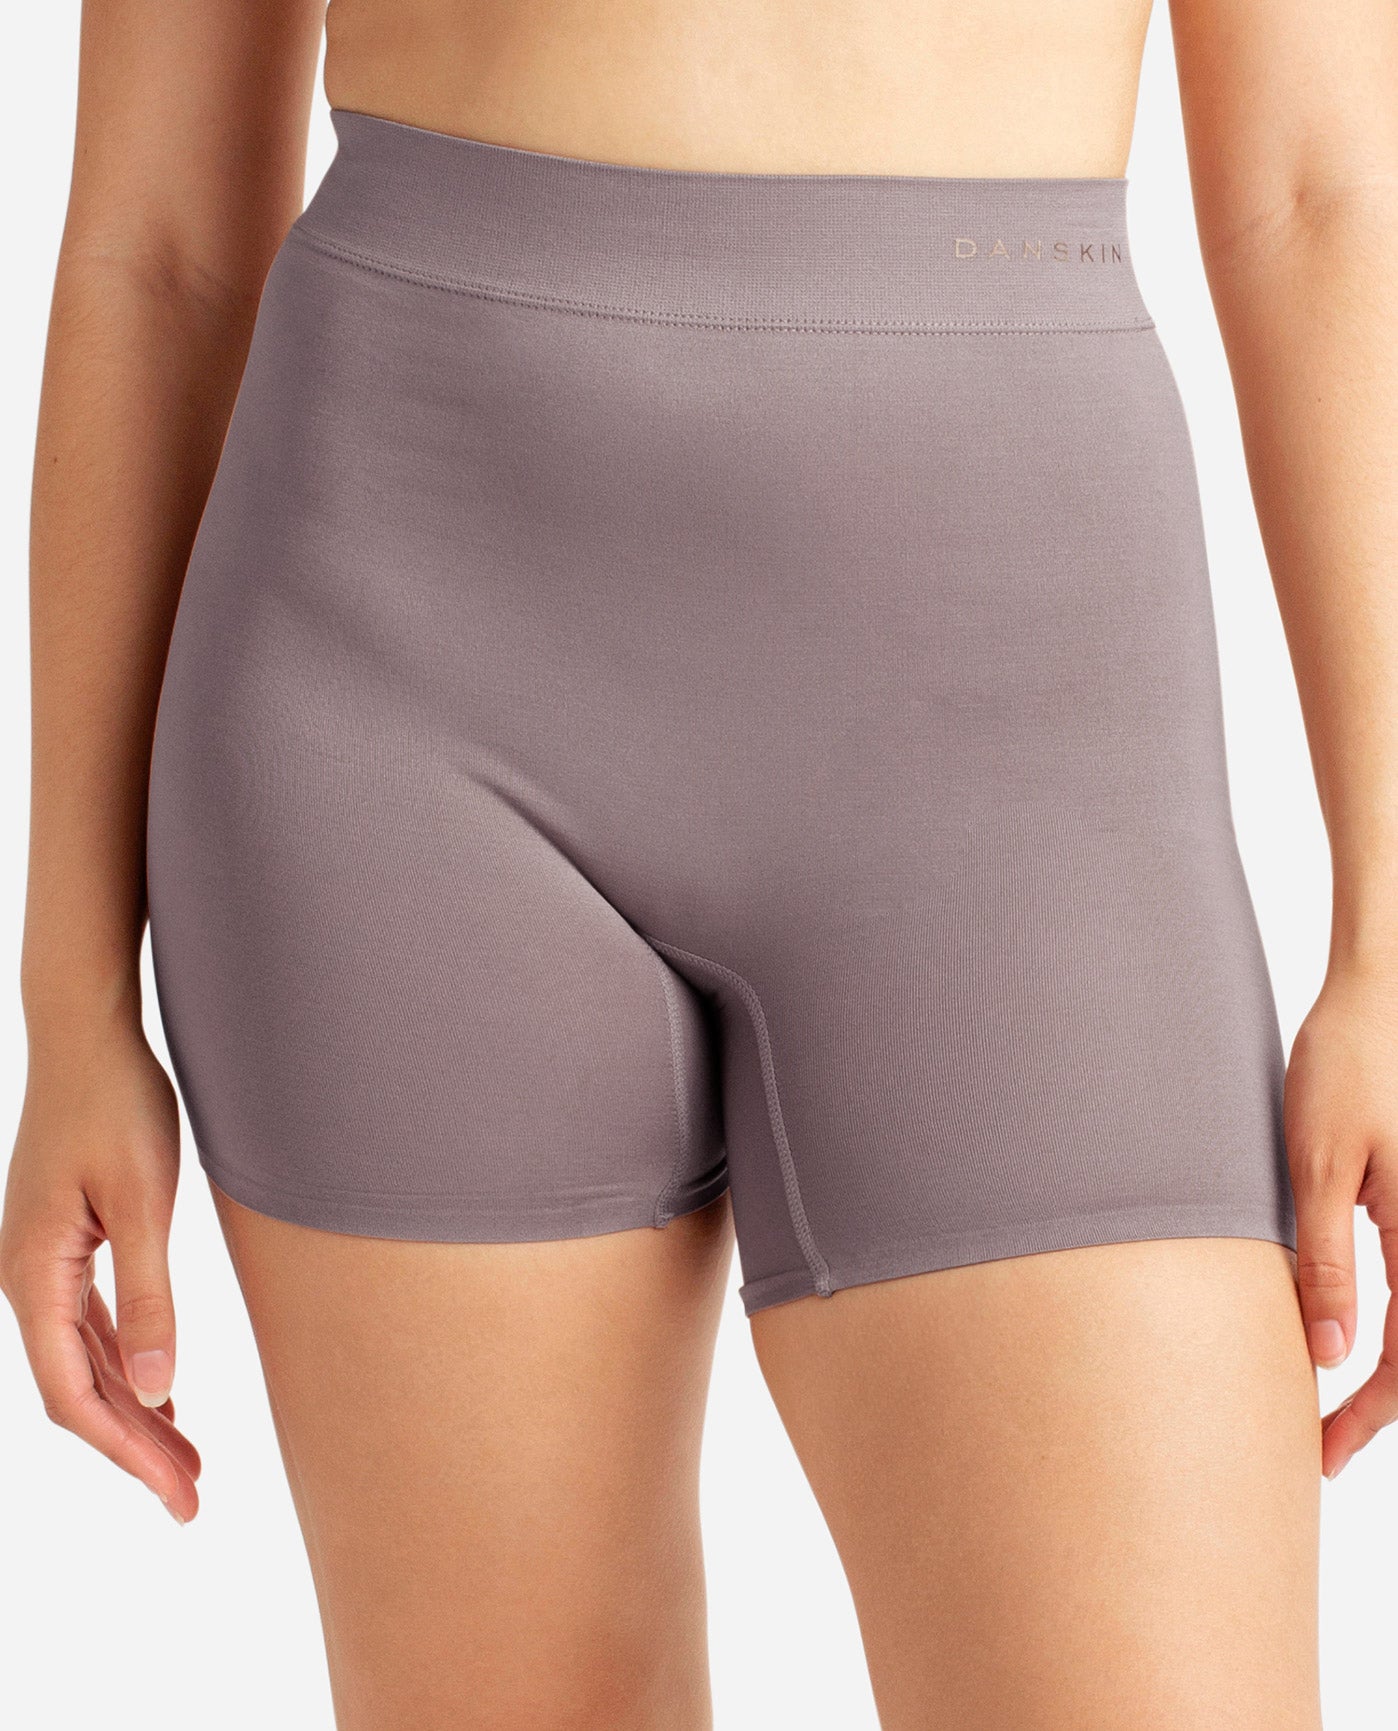 3-Pack: Slip Shorts for Women Under Dress, Comfortable Smooth Yoga Sho